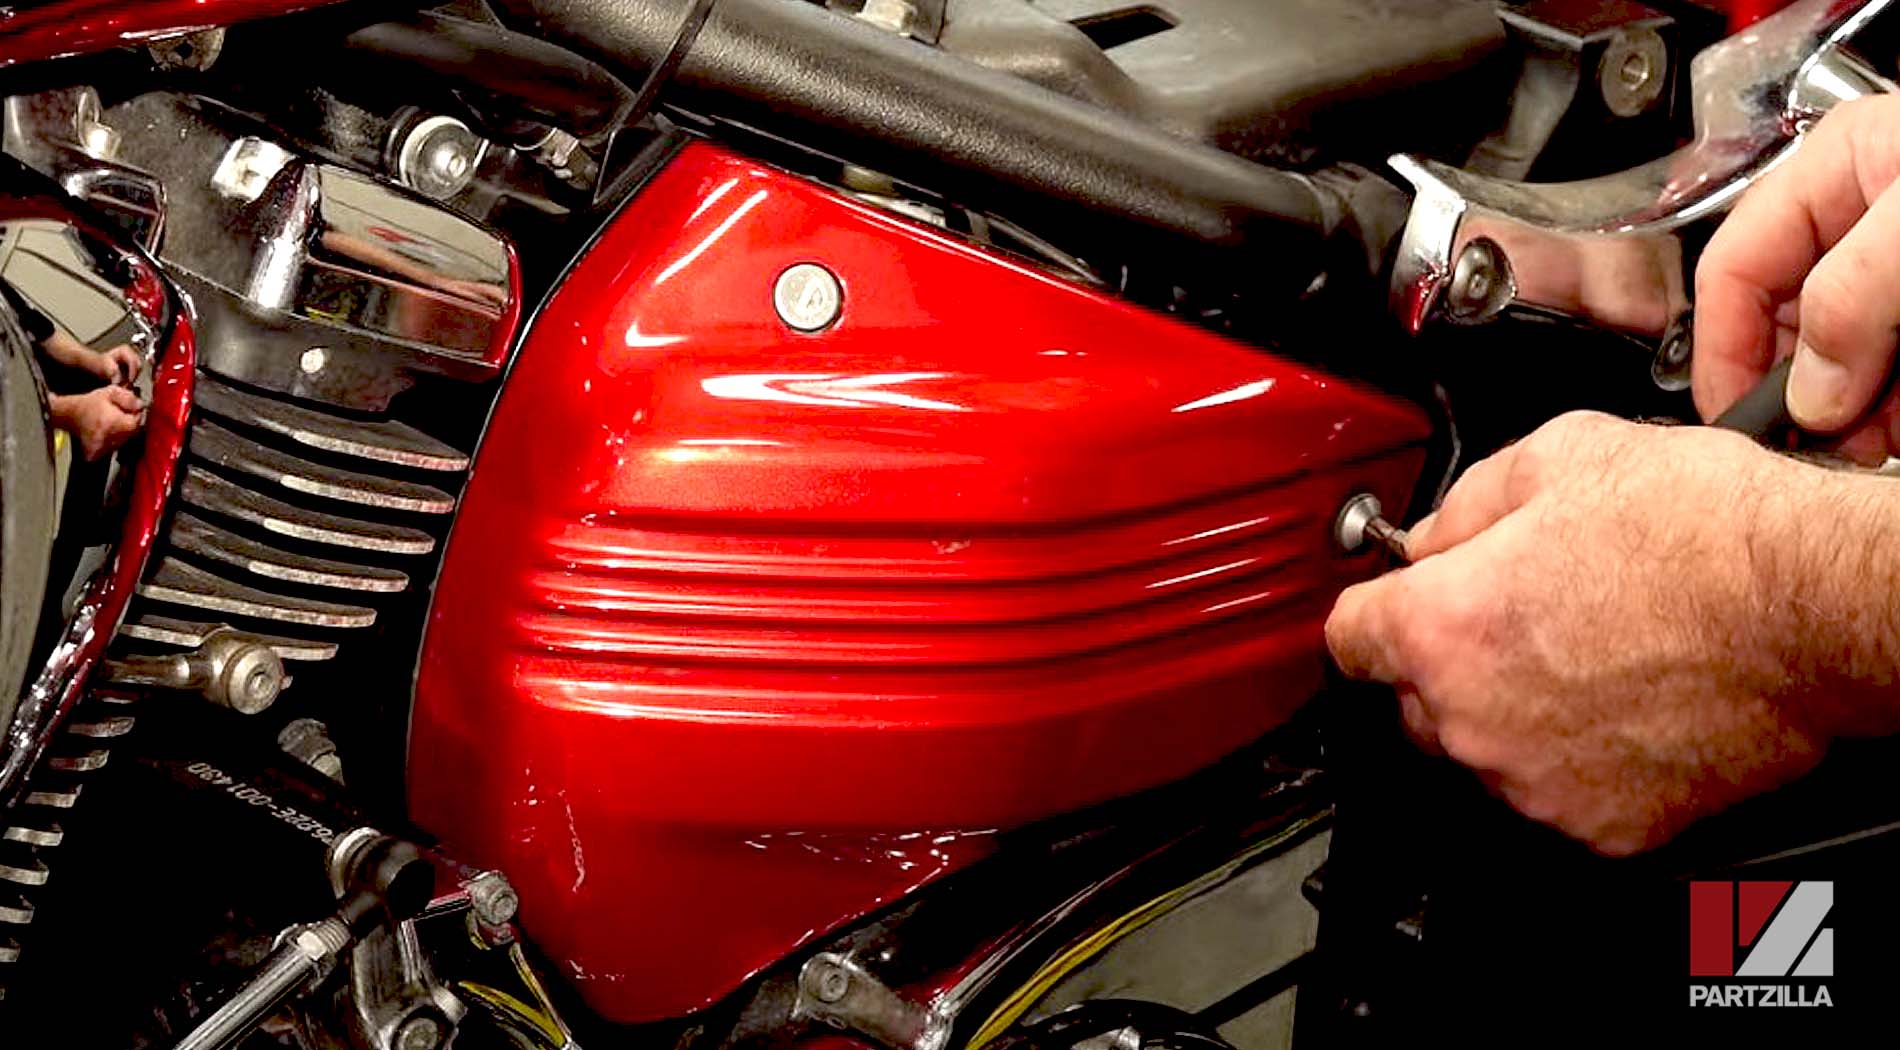 How to change Yamaha motorcycle spark plugs